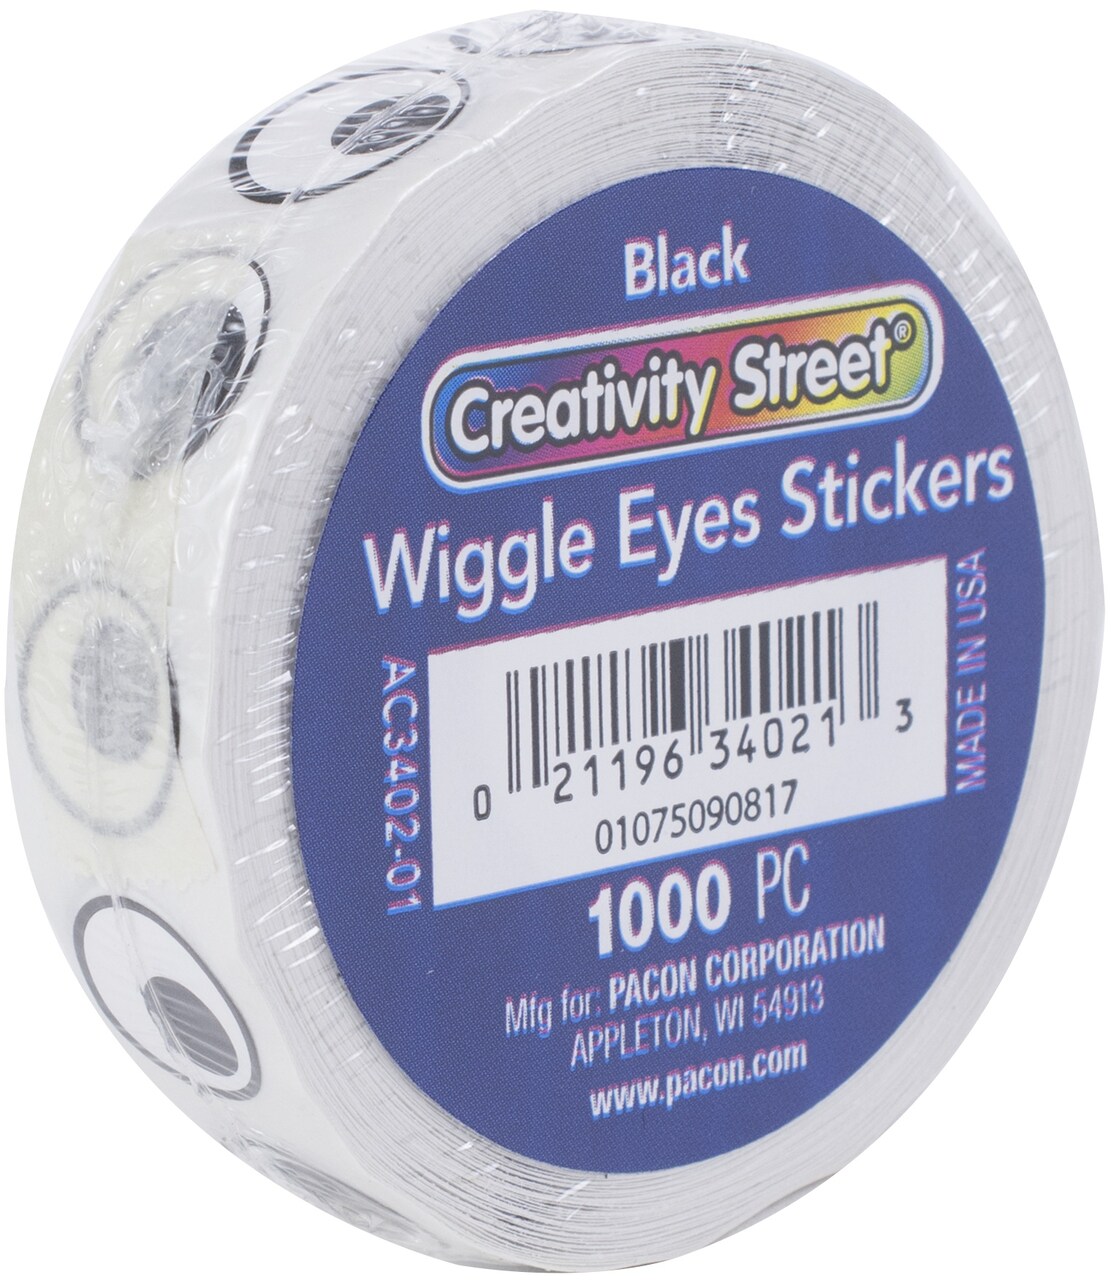 Wiggle Eyes Stickers, Black